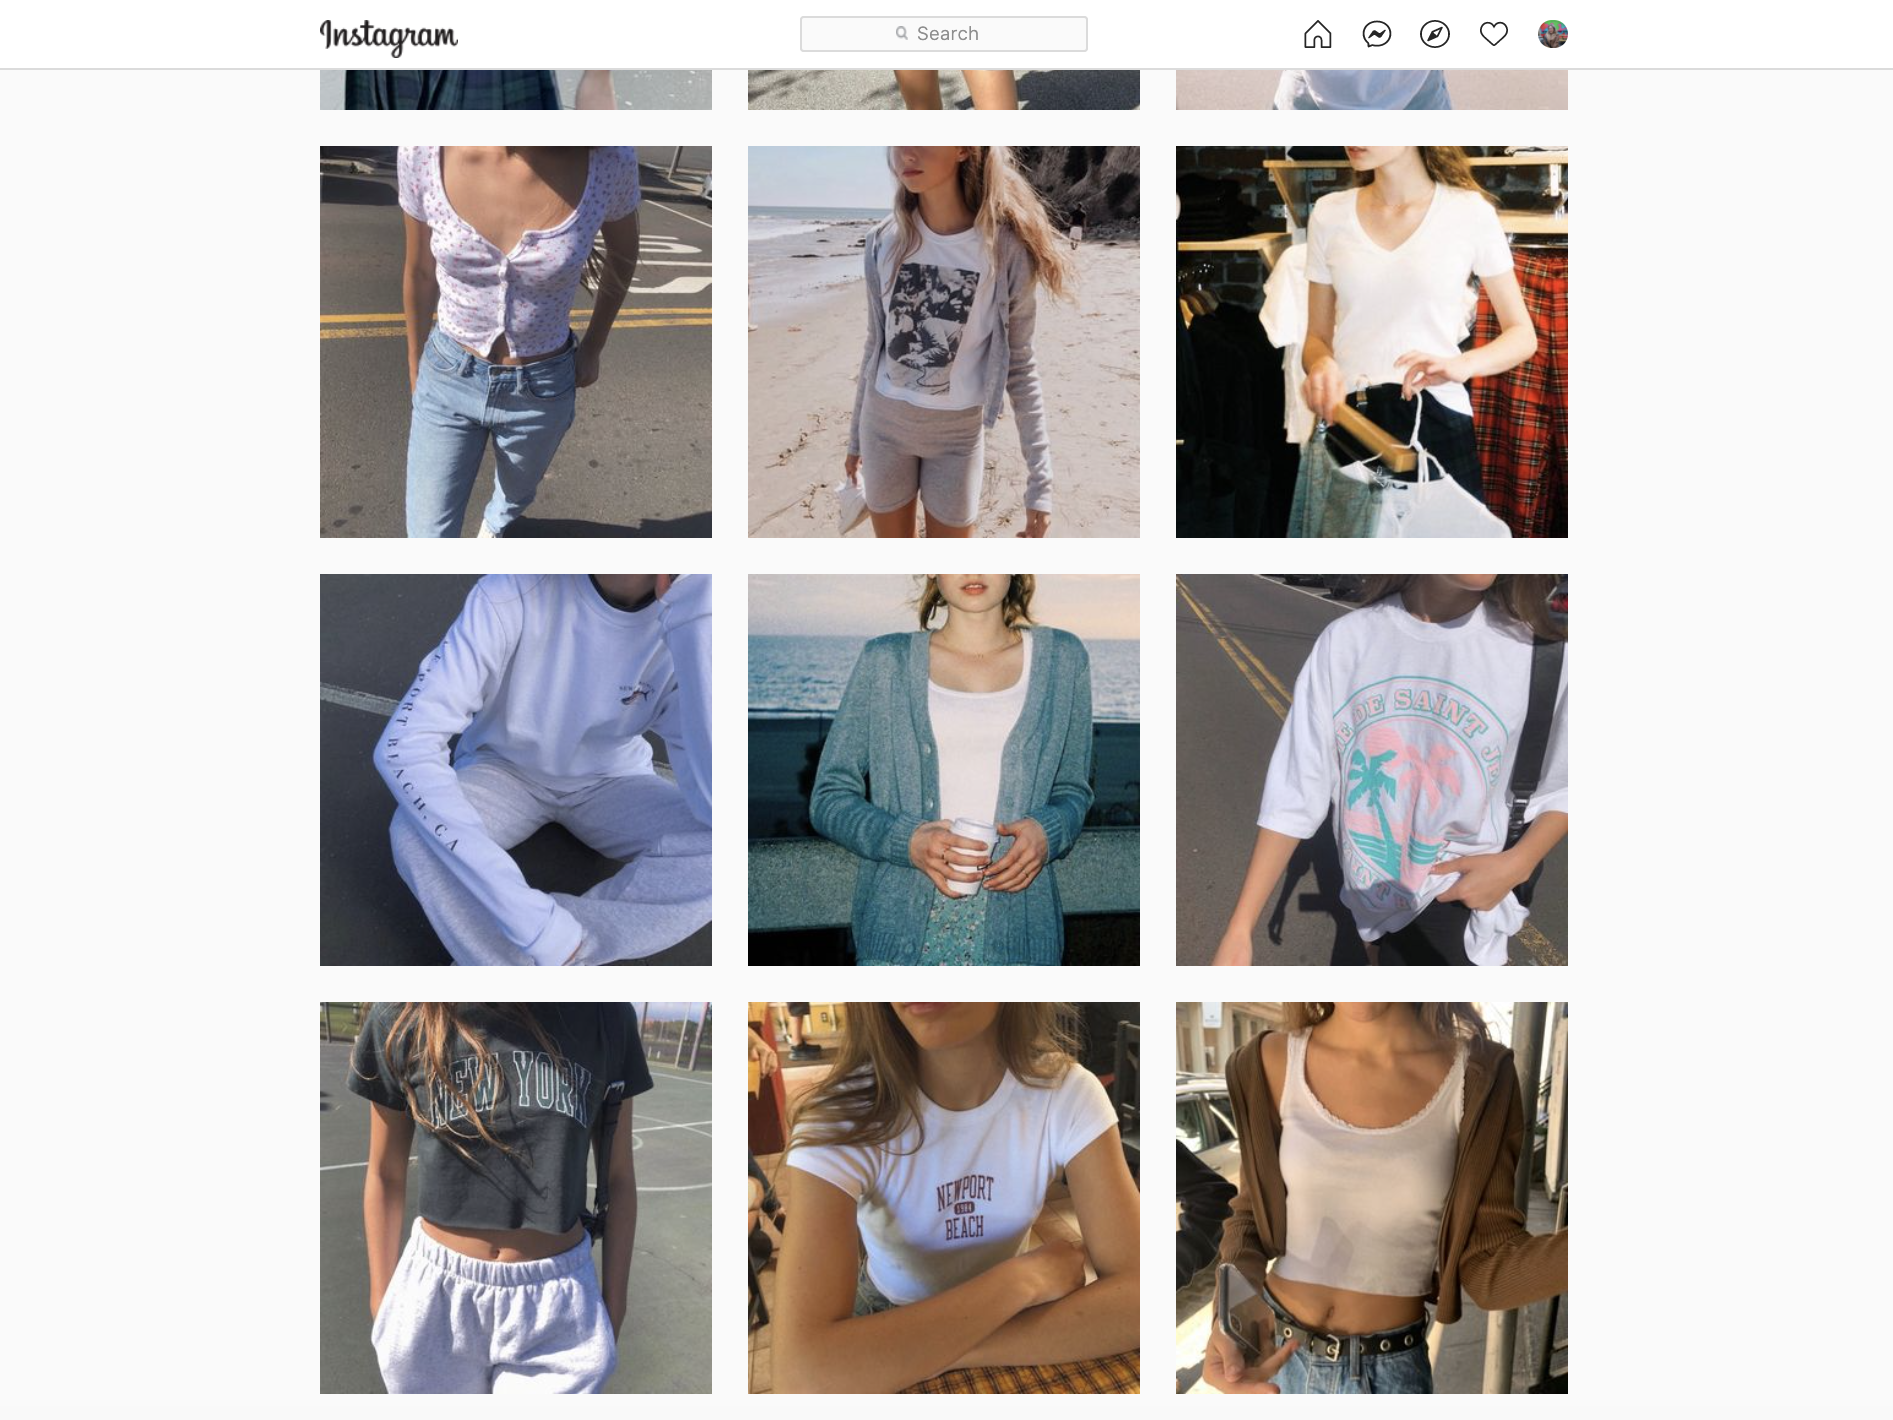 Brandy Melville's Instagram grid, showing various thin, white girls